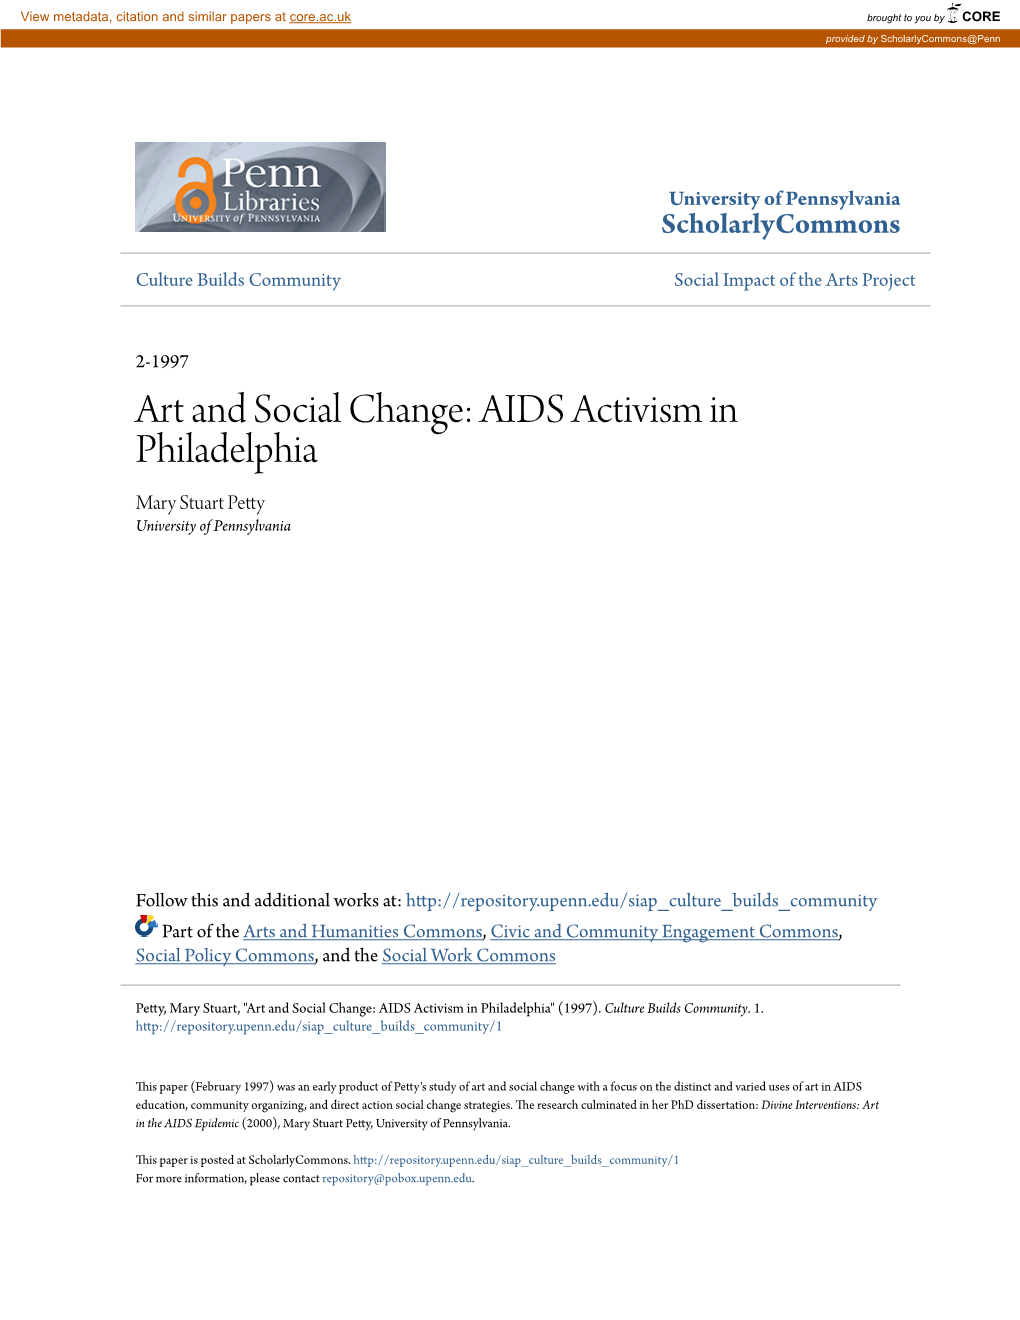 Art and Social Change: AIDS Activism in Philadelphia Mary Stuart Petty University of Pennsylvania